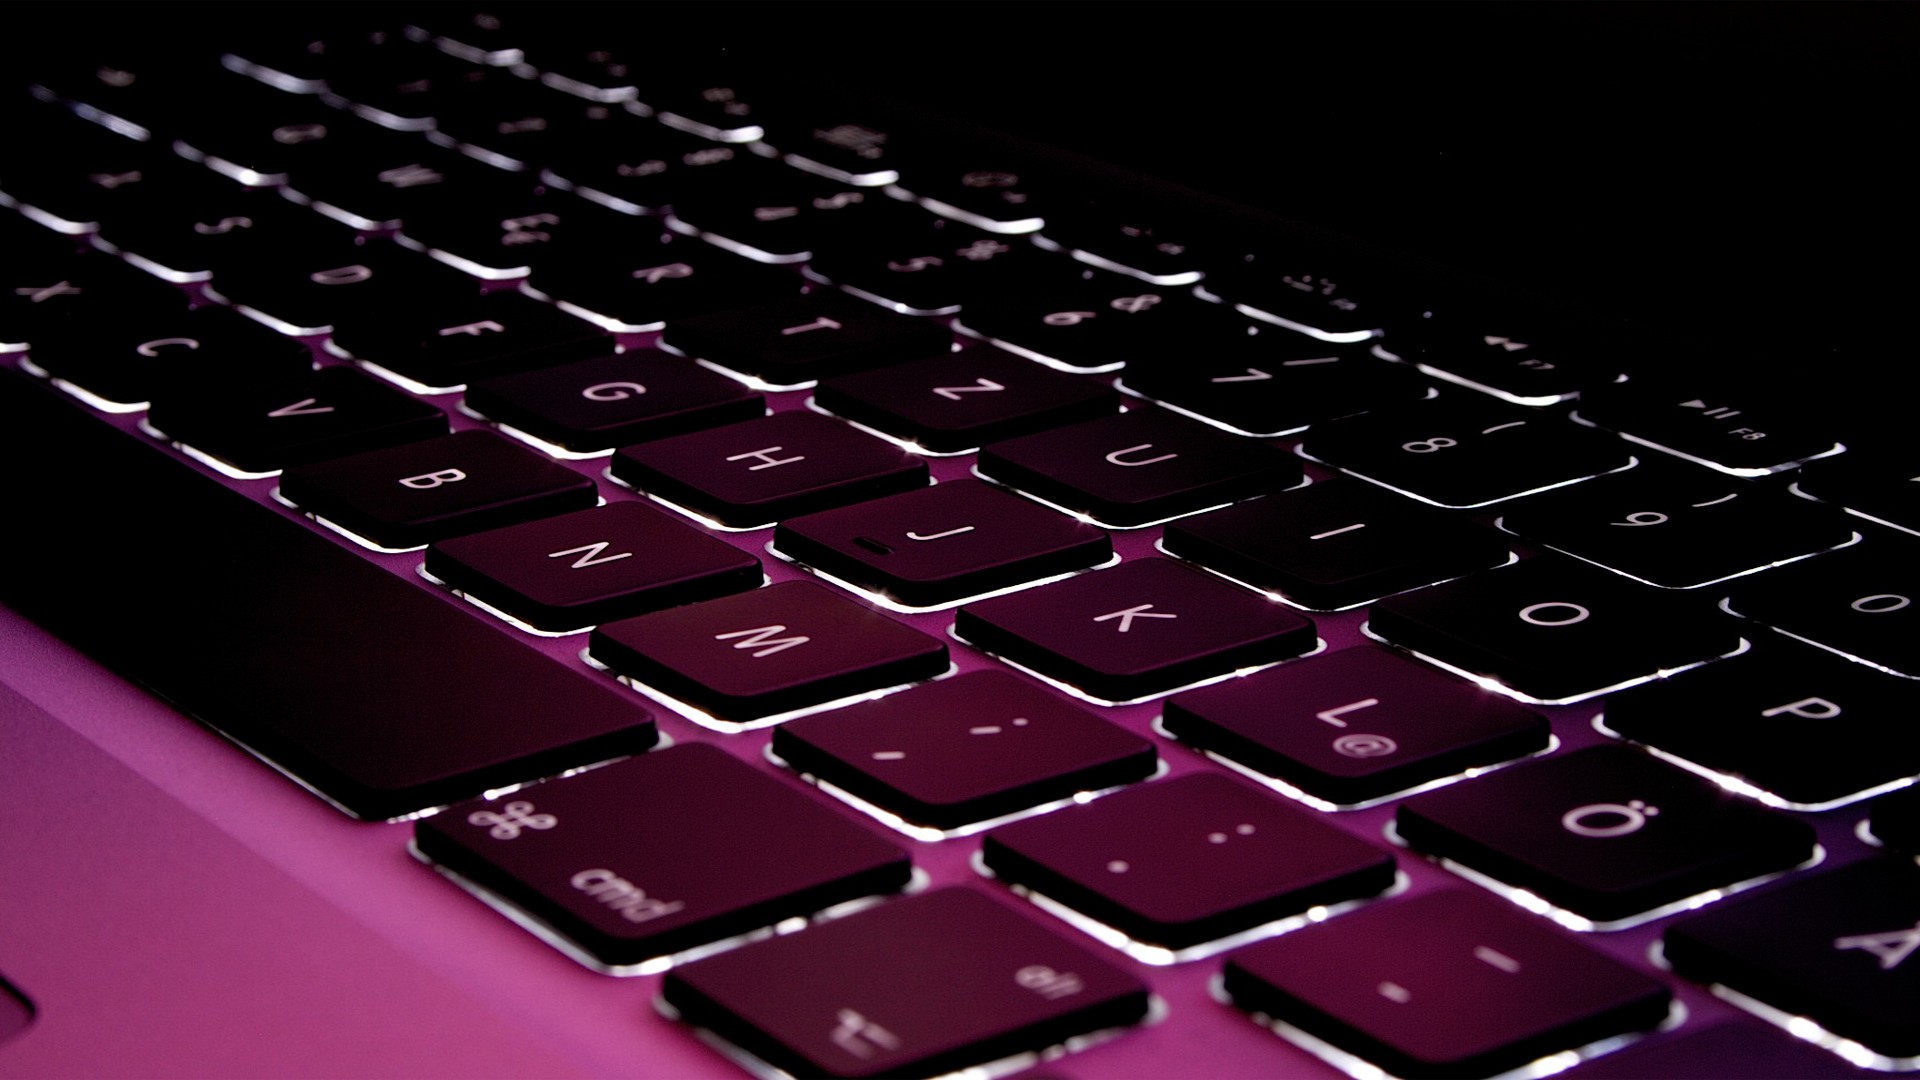 keyboard wallpaper hd,computer keyboard,purple,red,pink,technology